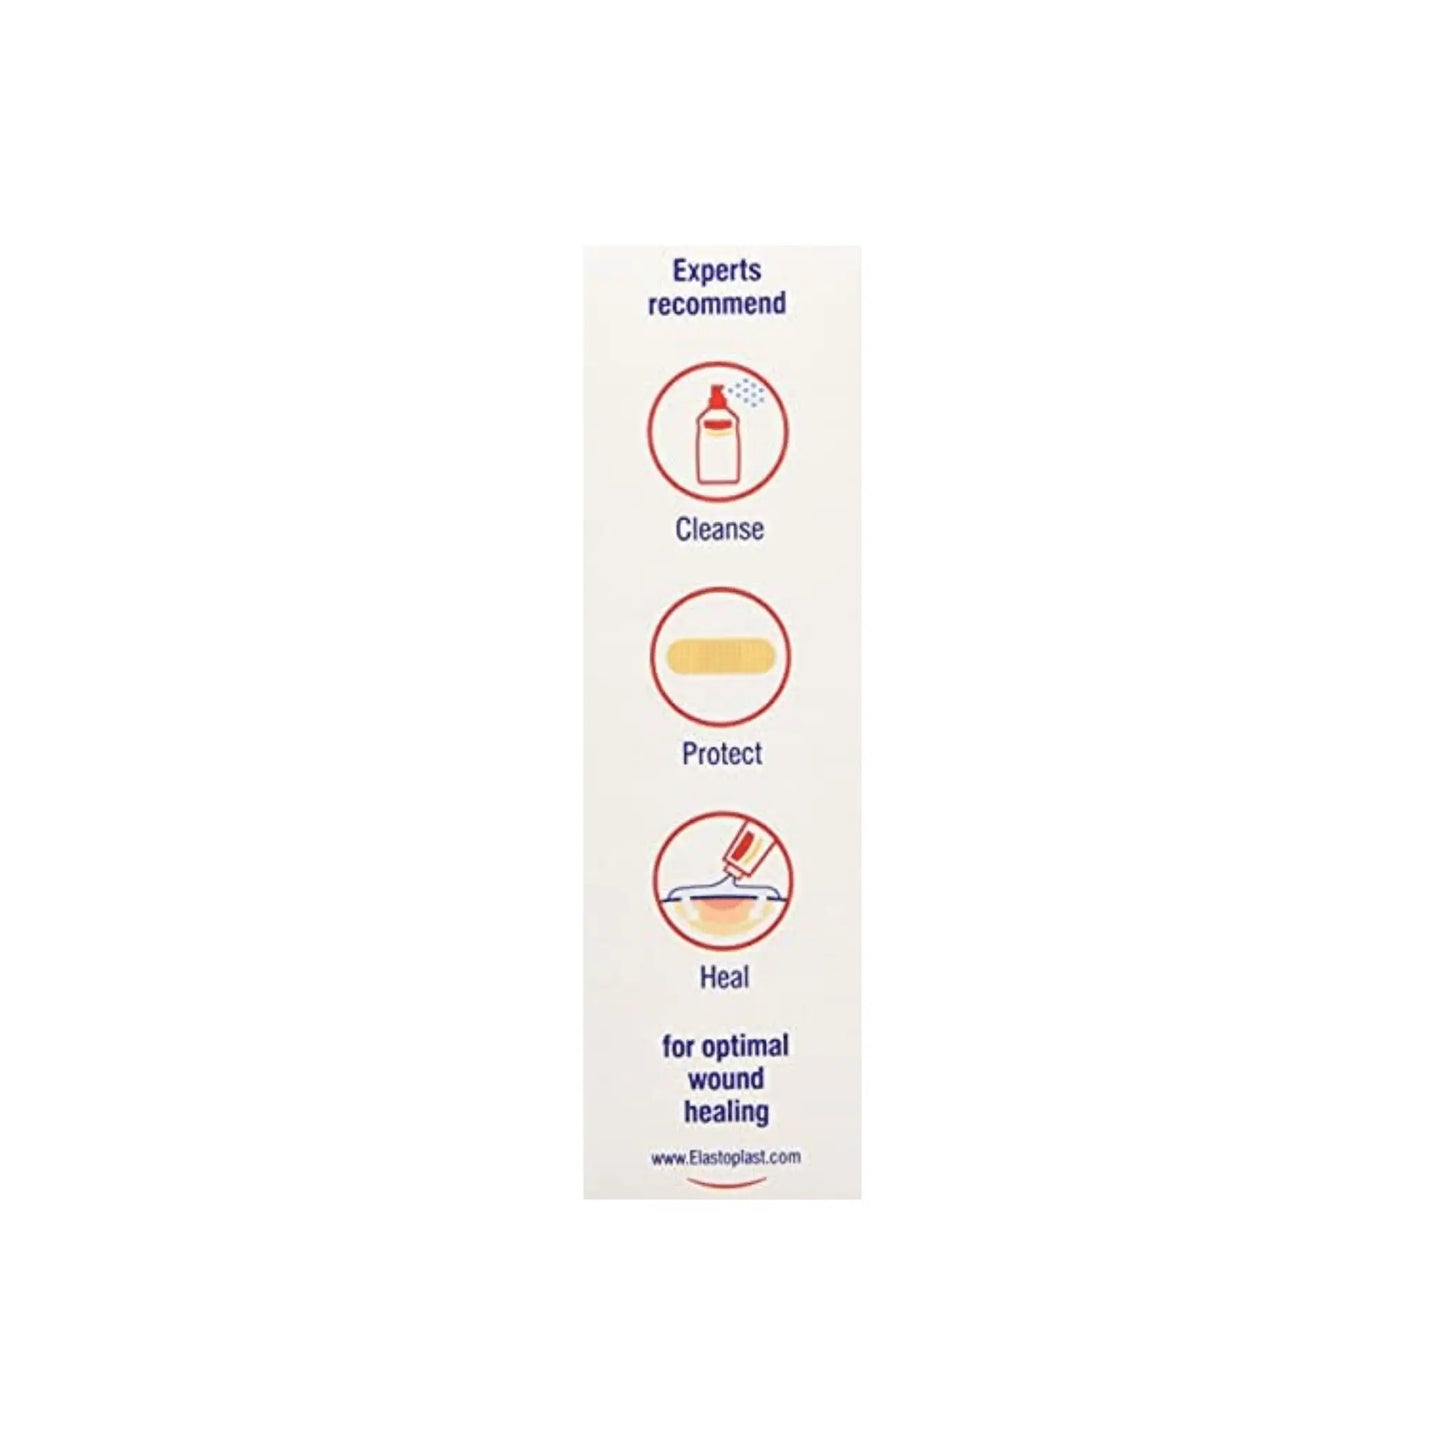 Elastoplast Extra Flexible Fabric Plasters Total 200 Strips (40 Strips X 5 Pack) - Arc Health Nutrition UK Ltd